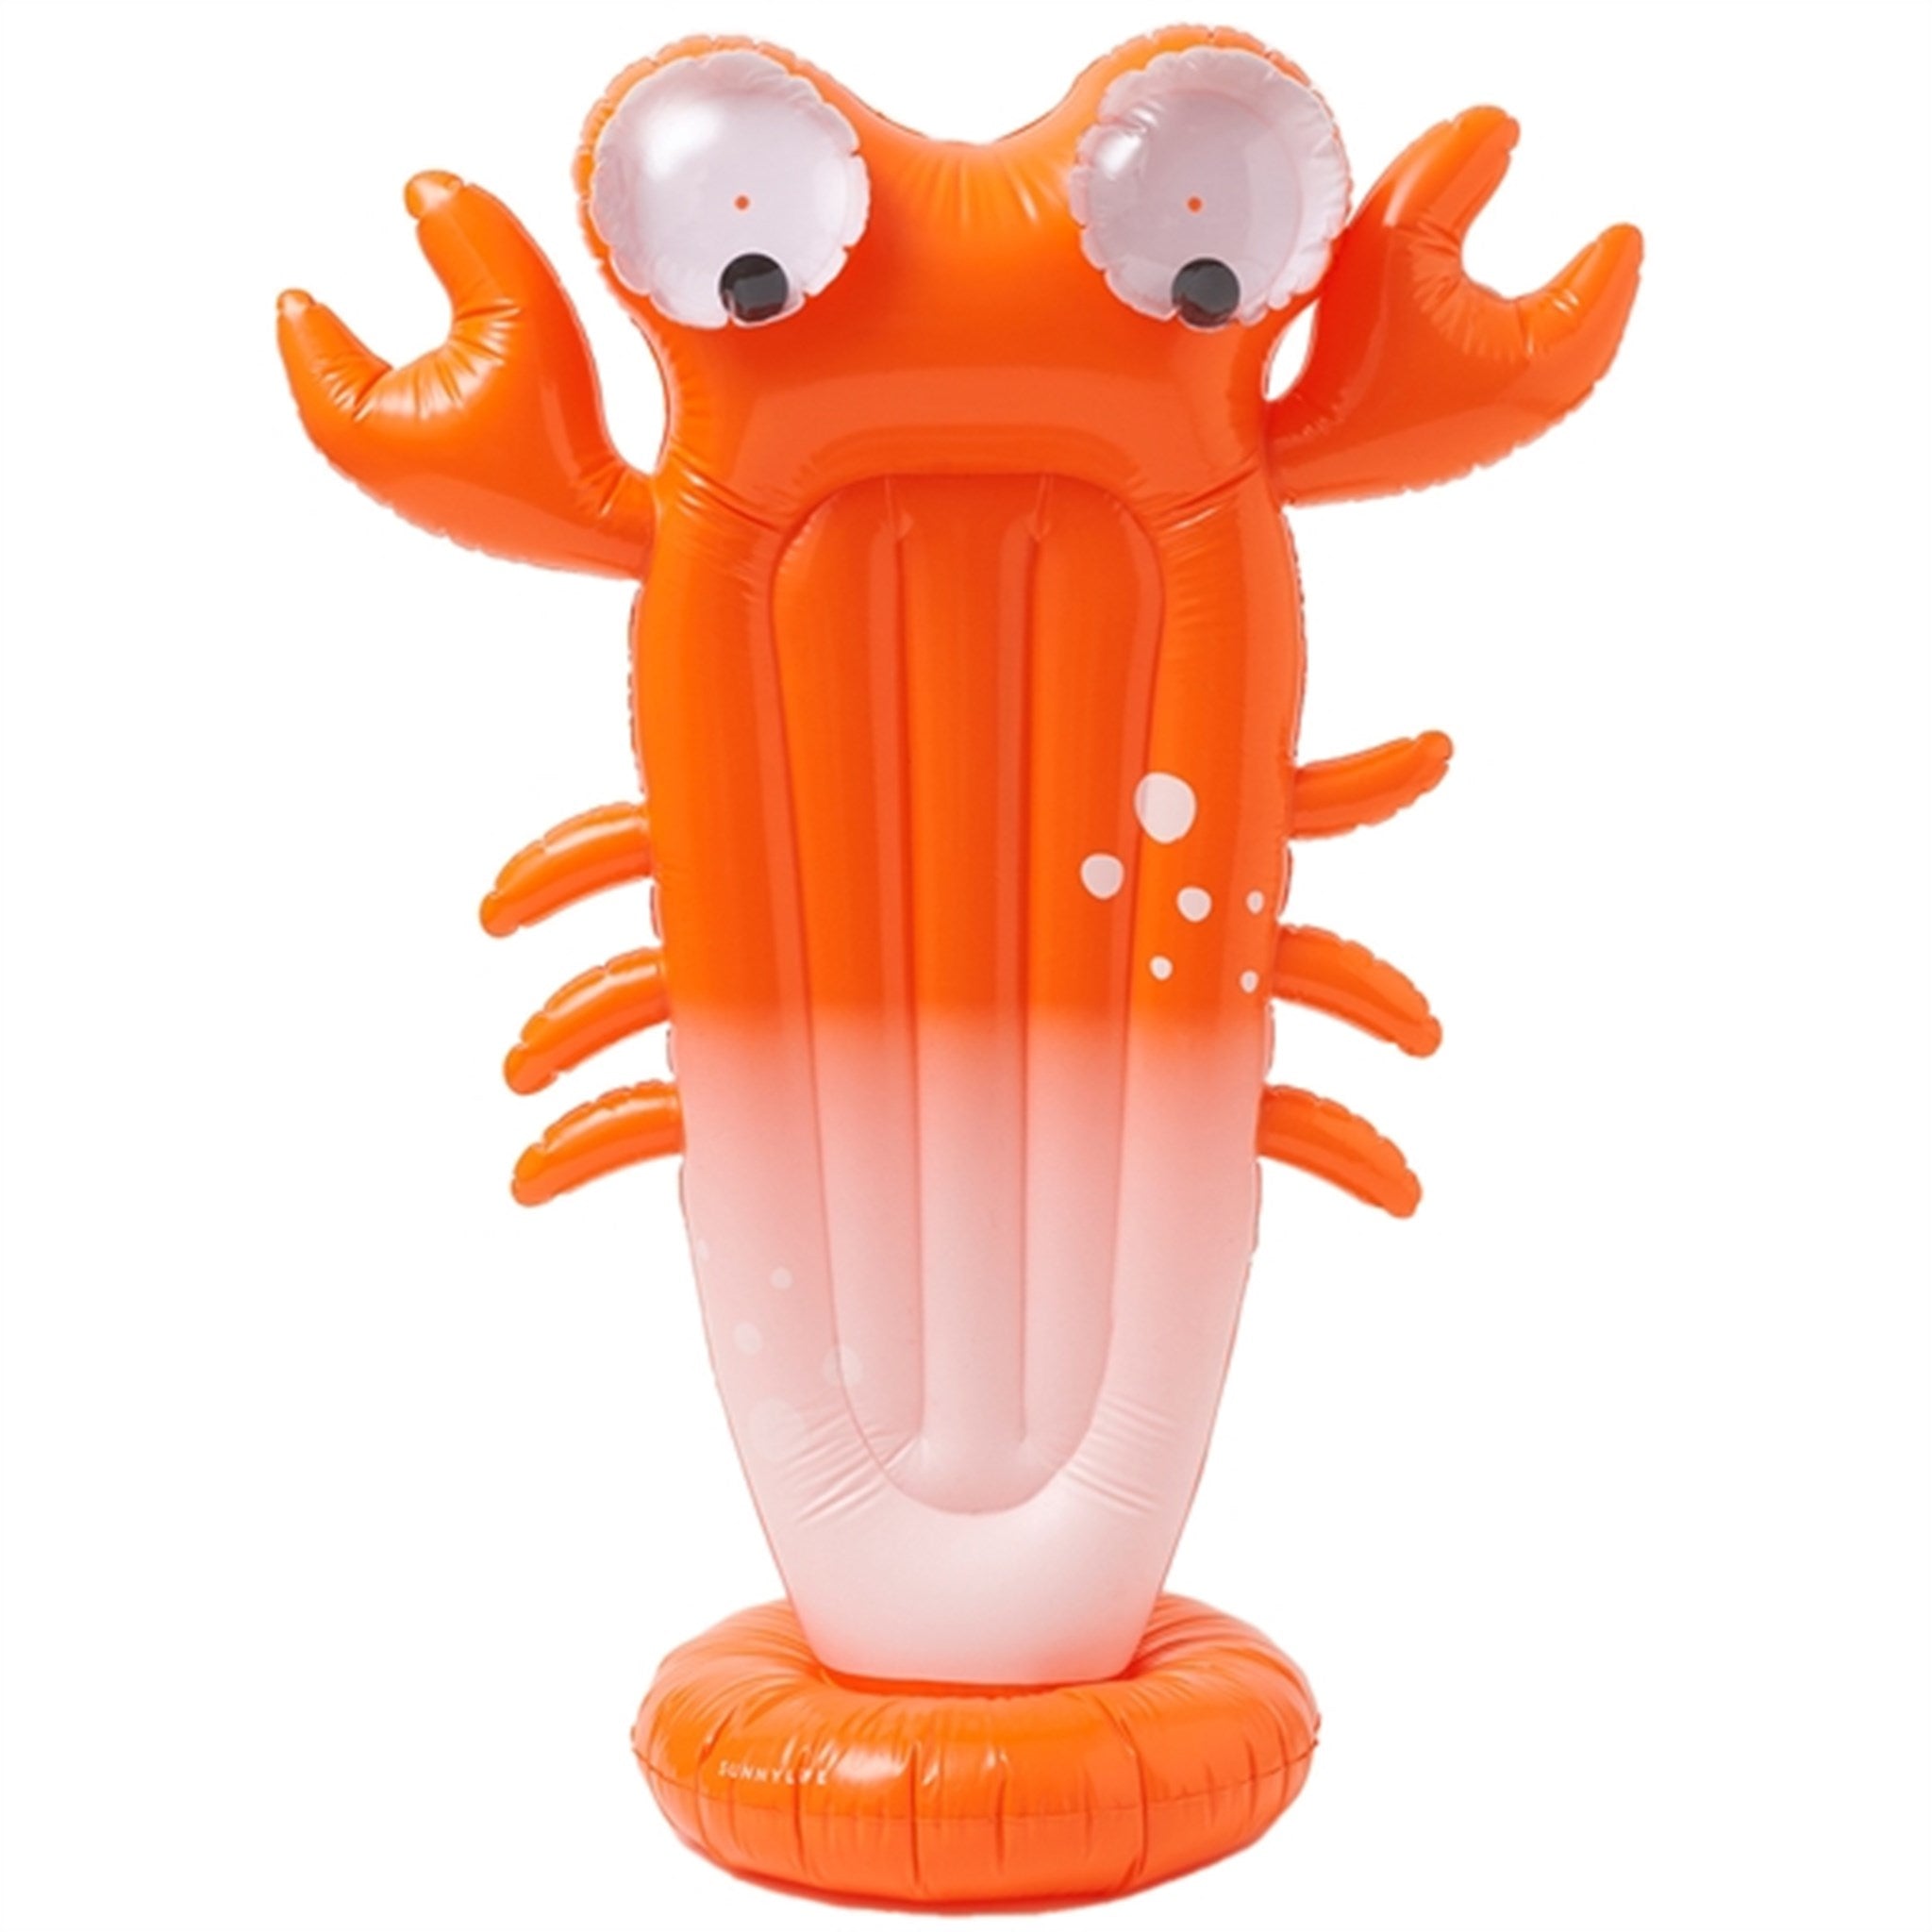 SunnyLife Sprinkler Giant Sonny the Sea Creature Neon Orange